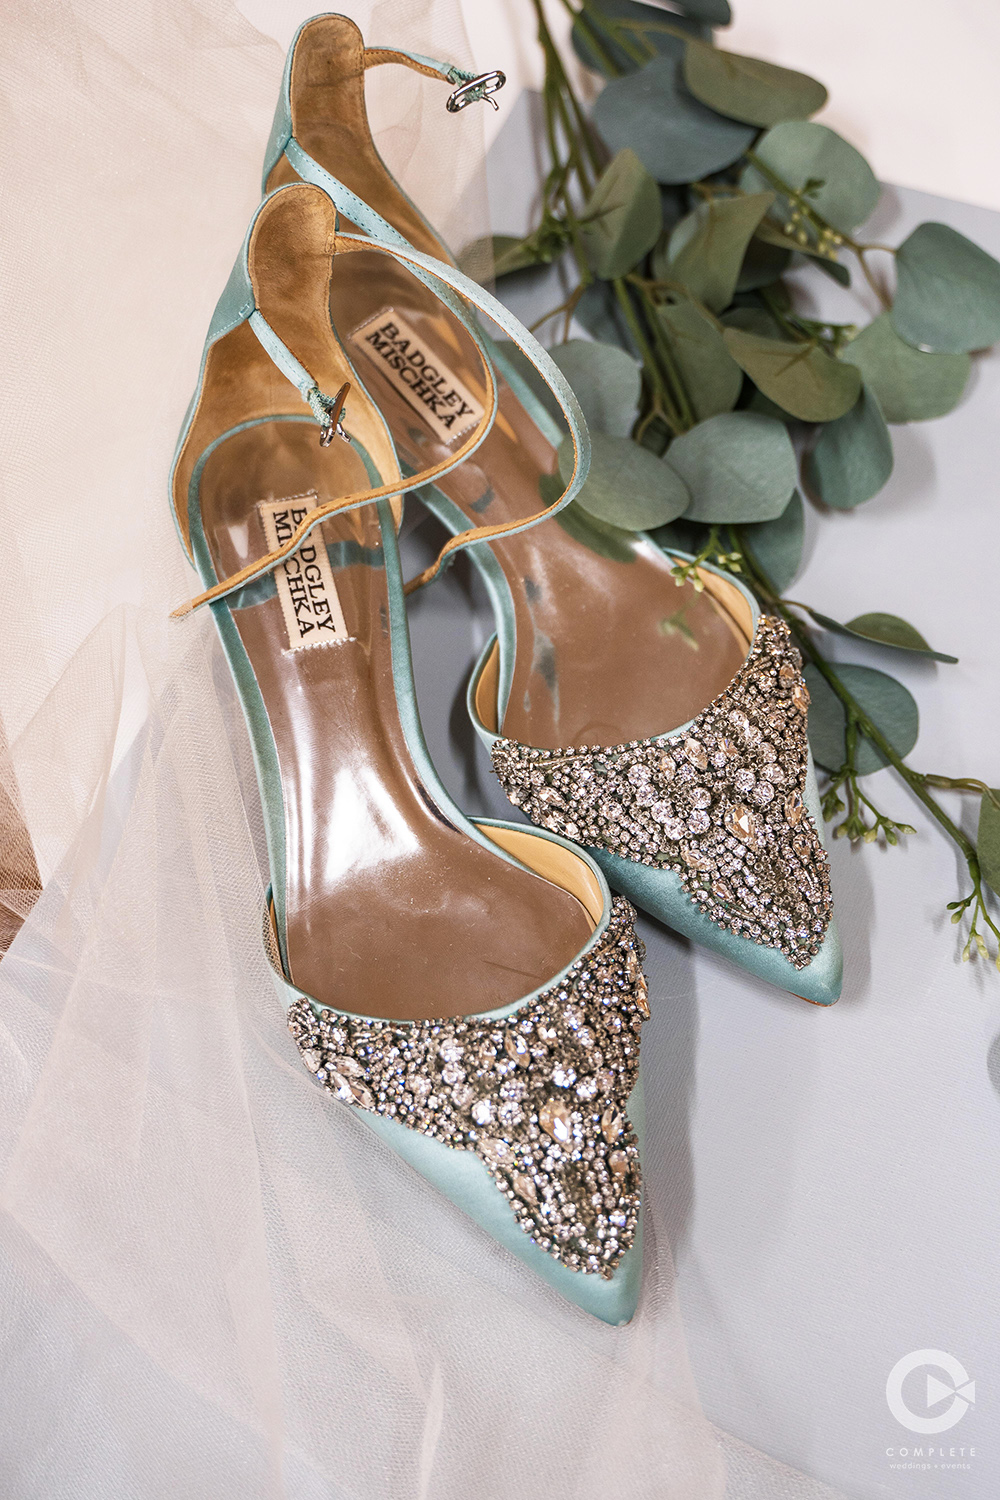 Wedding shoes, high heels vs flats on your wedding day